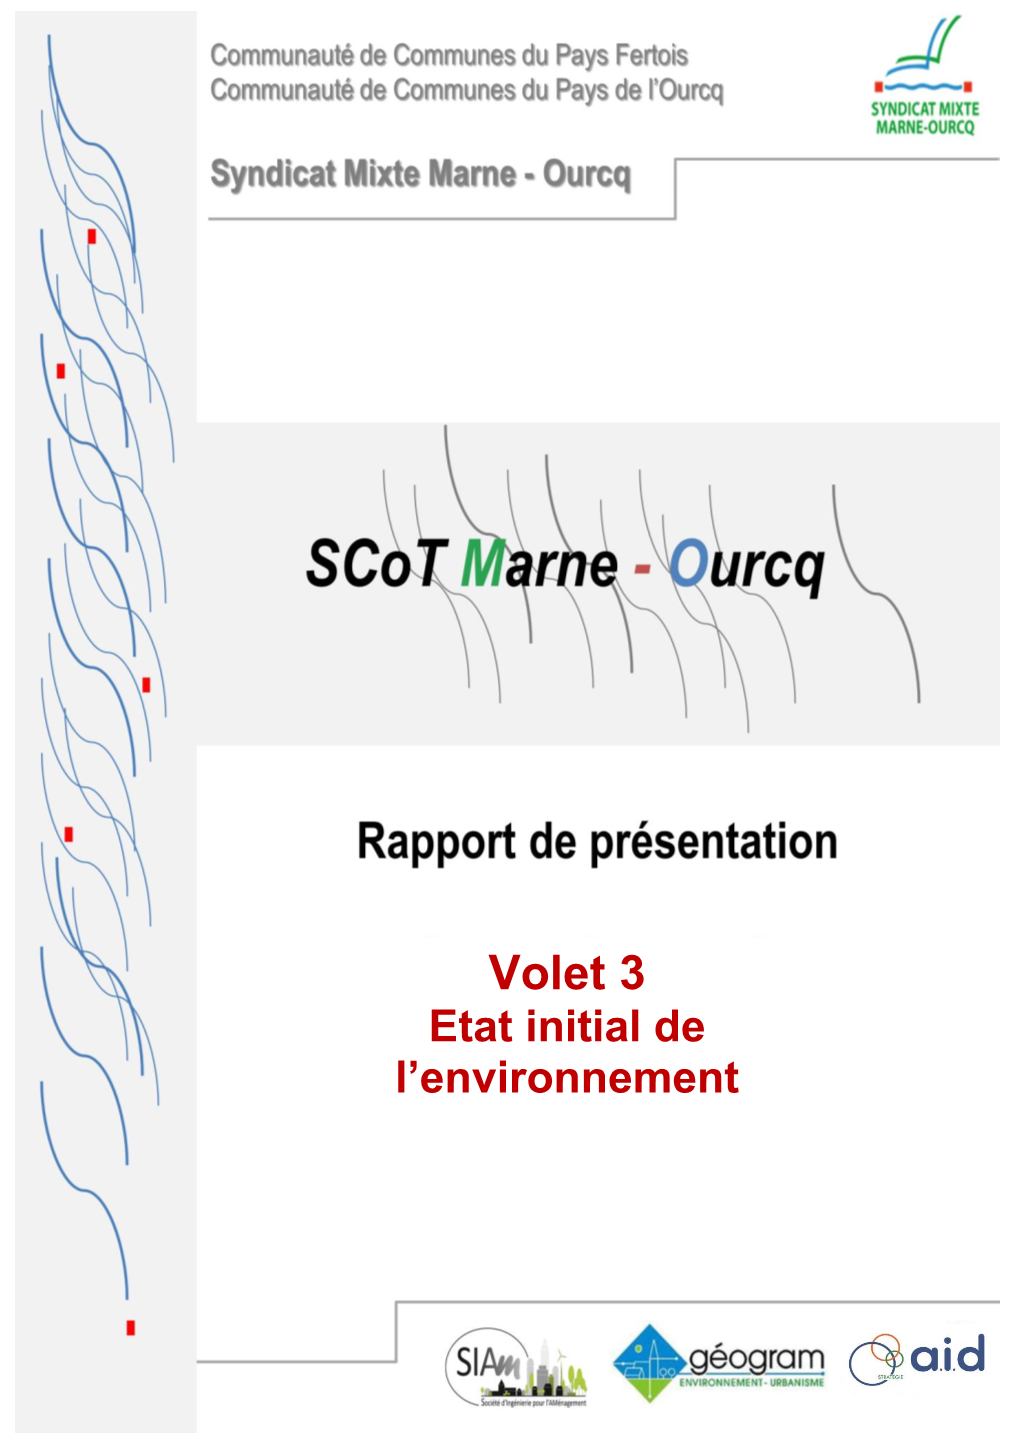 Scot Marne – Ourcq